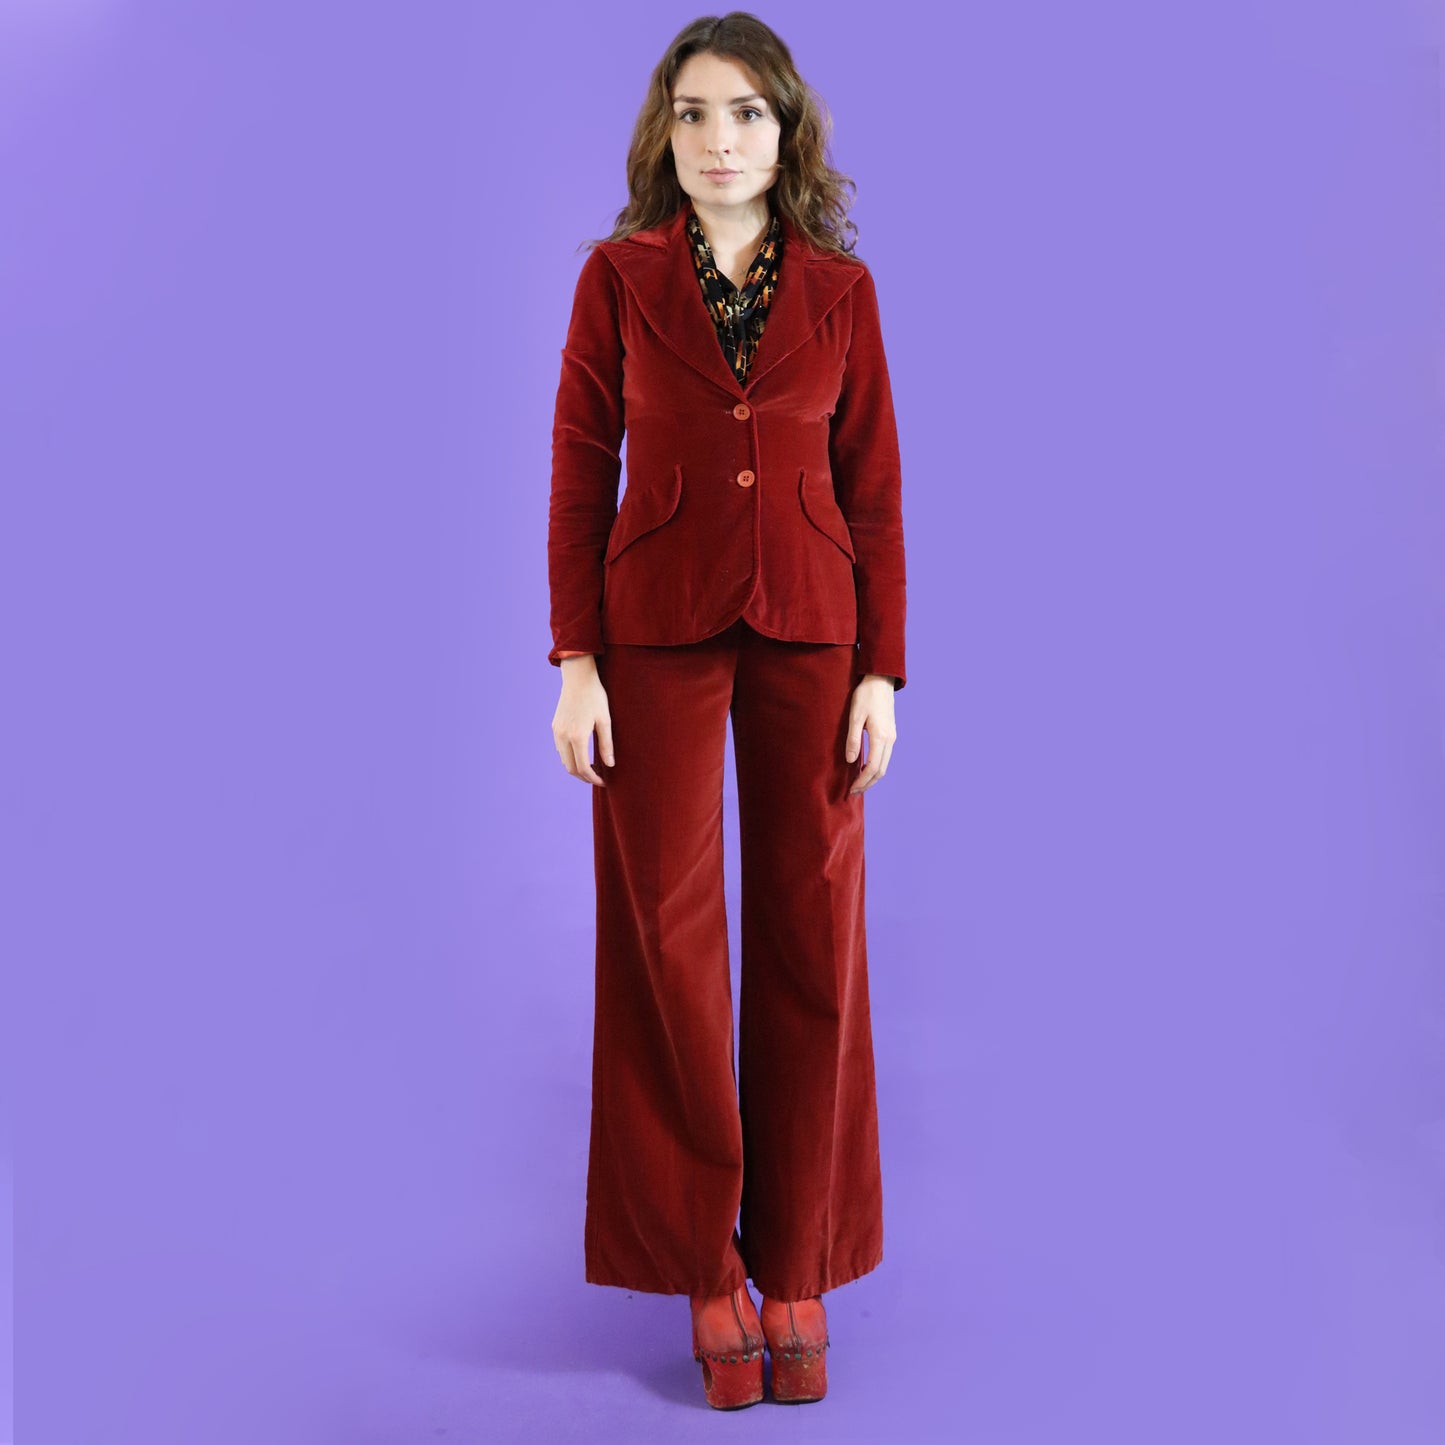 Vintage 1970s Brick Red Velvet Suit